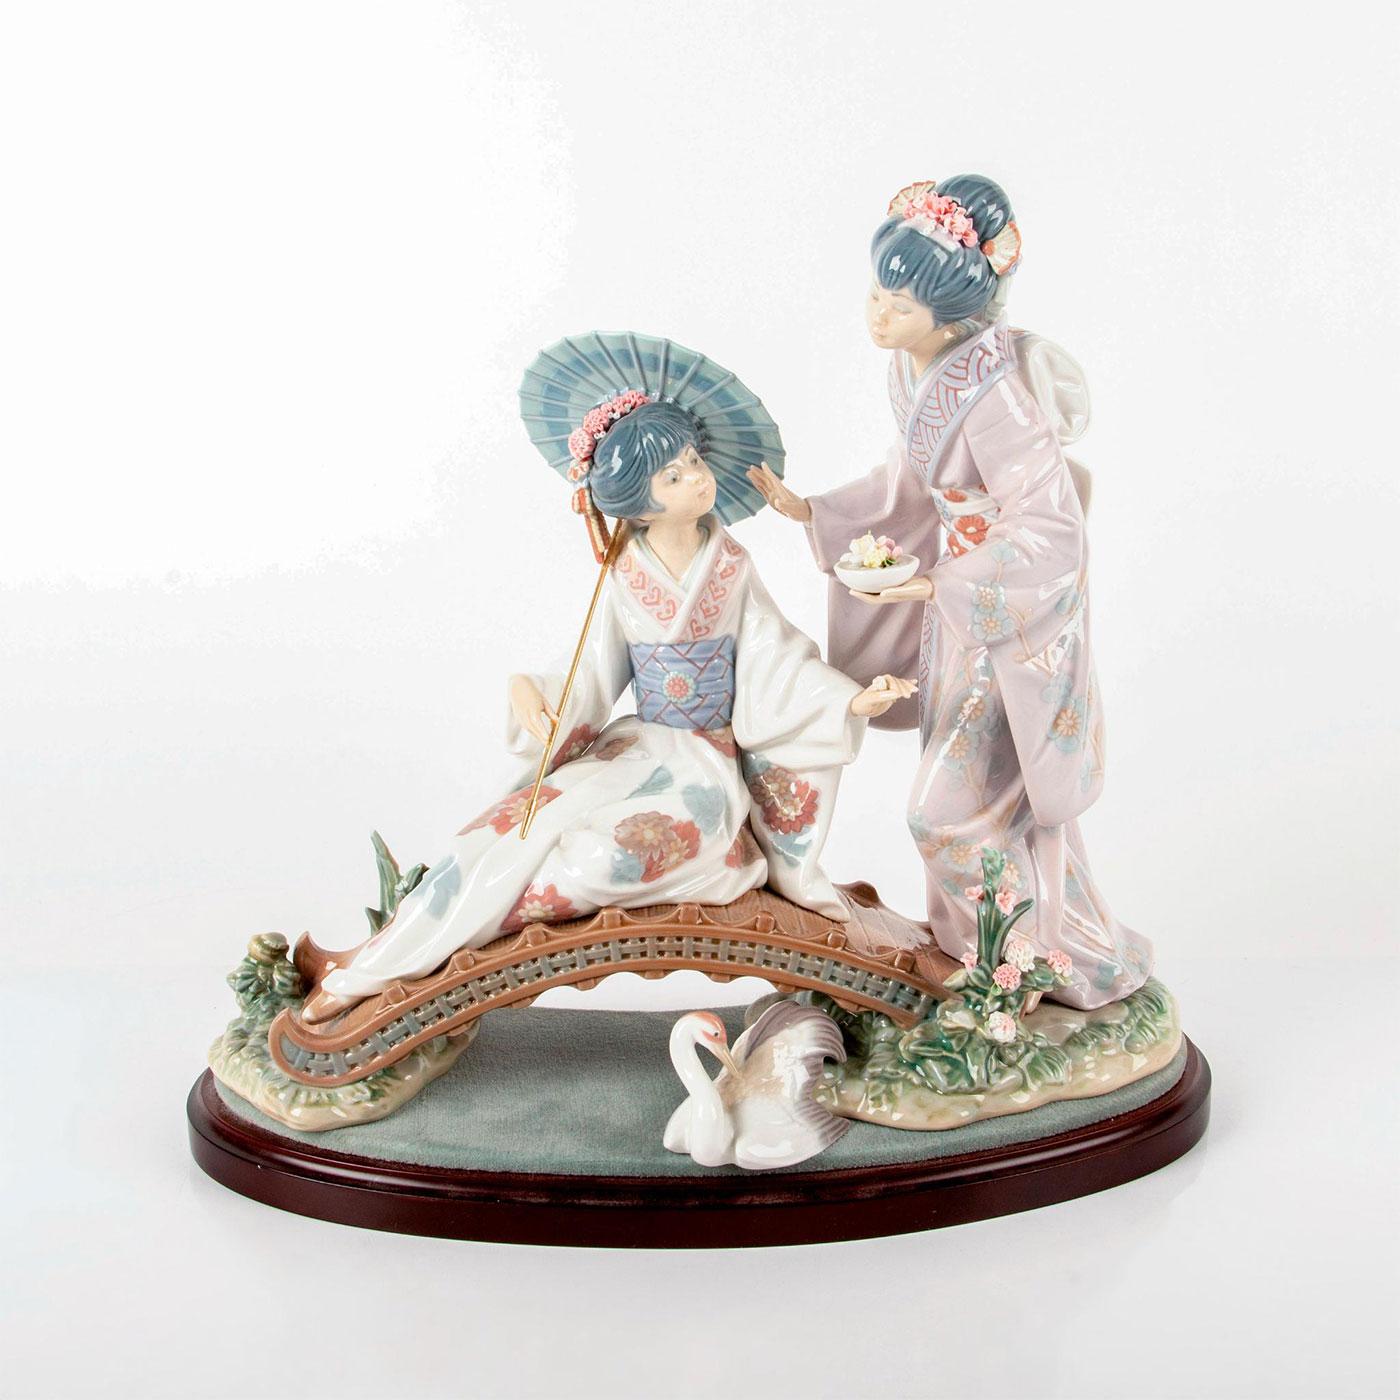 Lladro Spain Porcelain Figurine of Young Japanese Geisha Girl